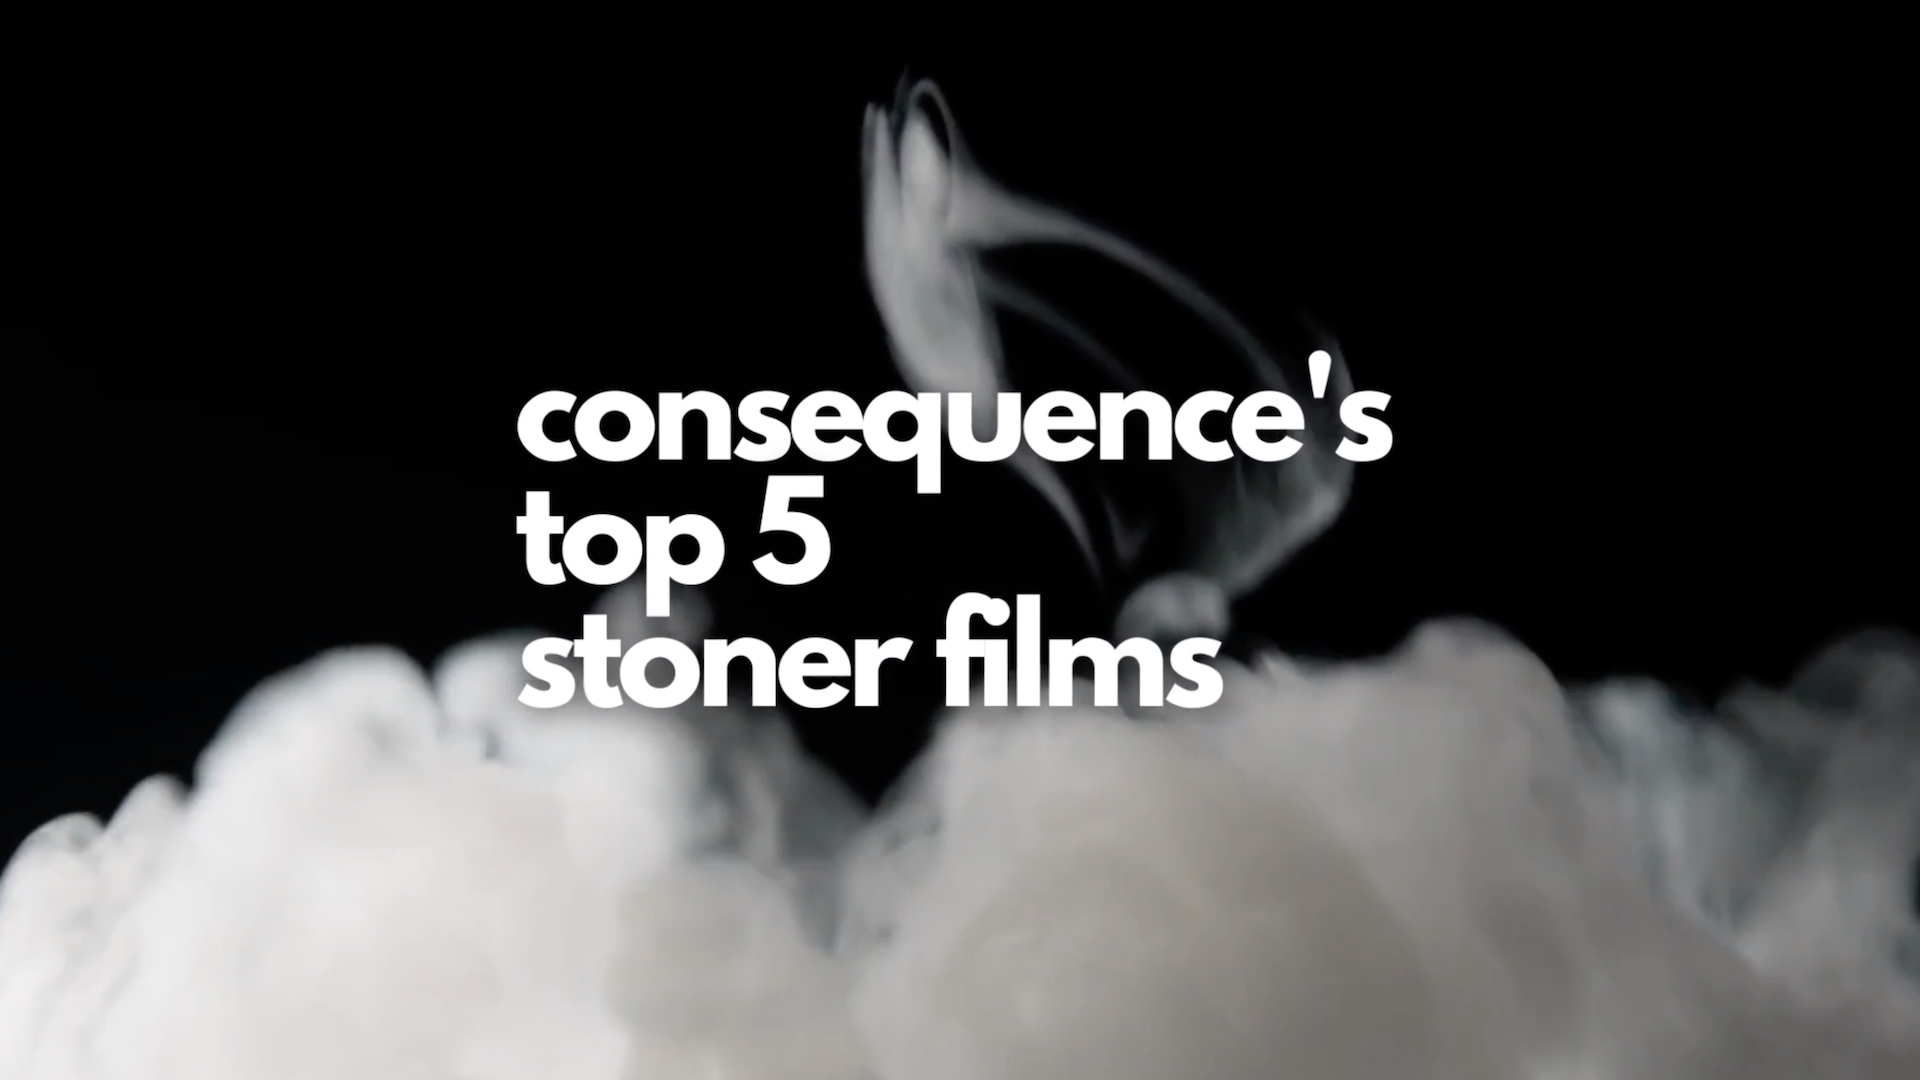 Top 5 Stoner Films